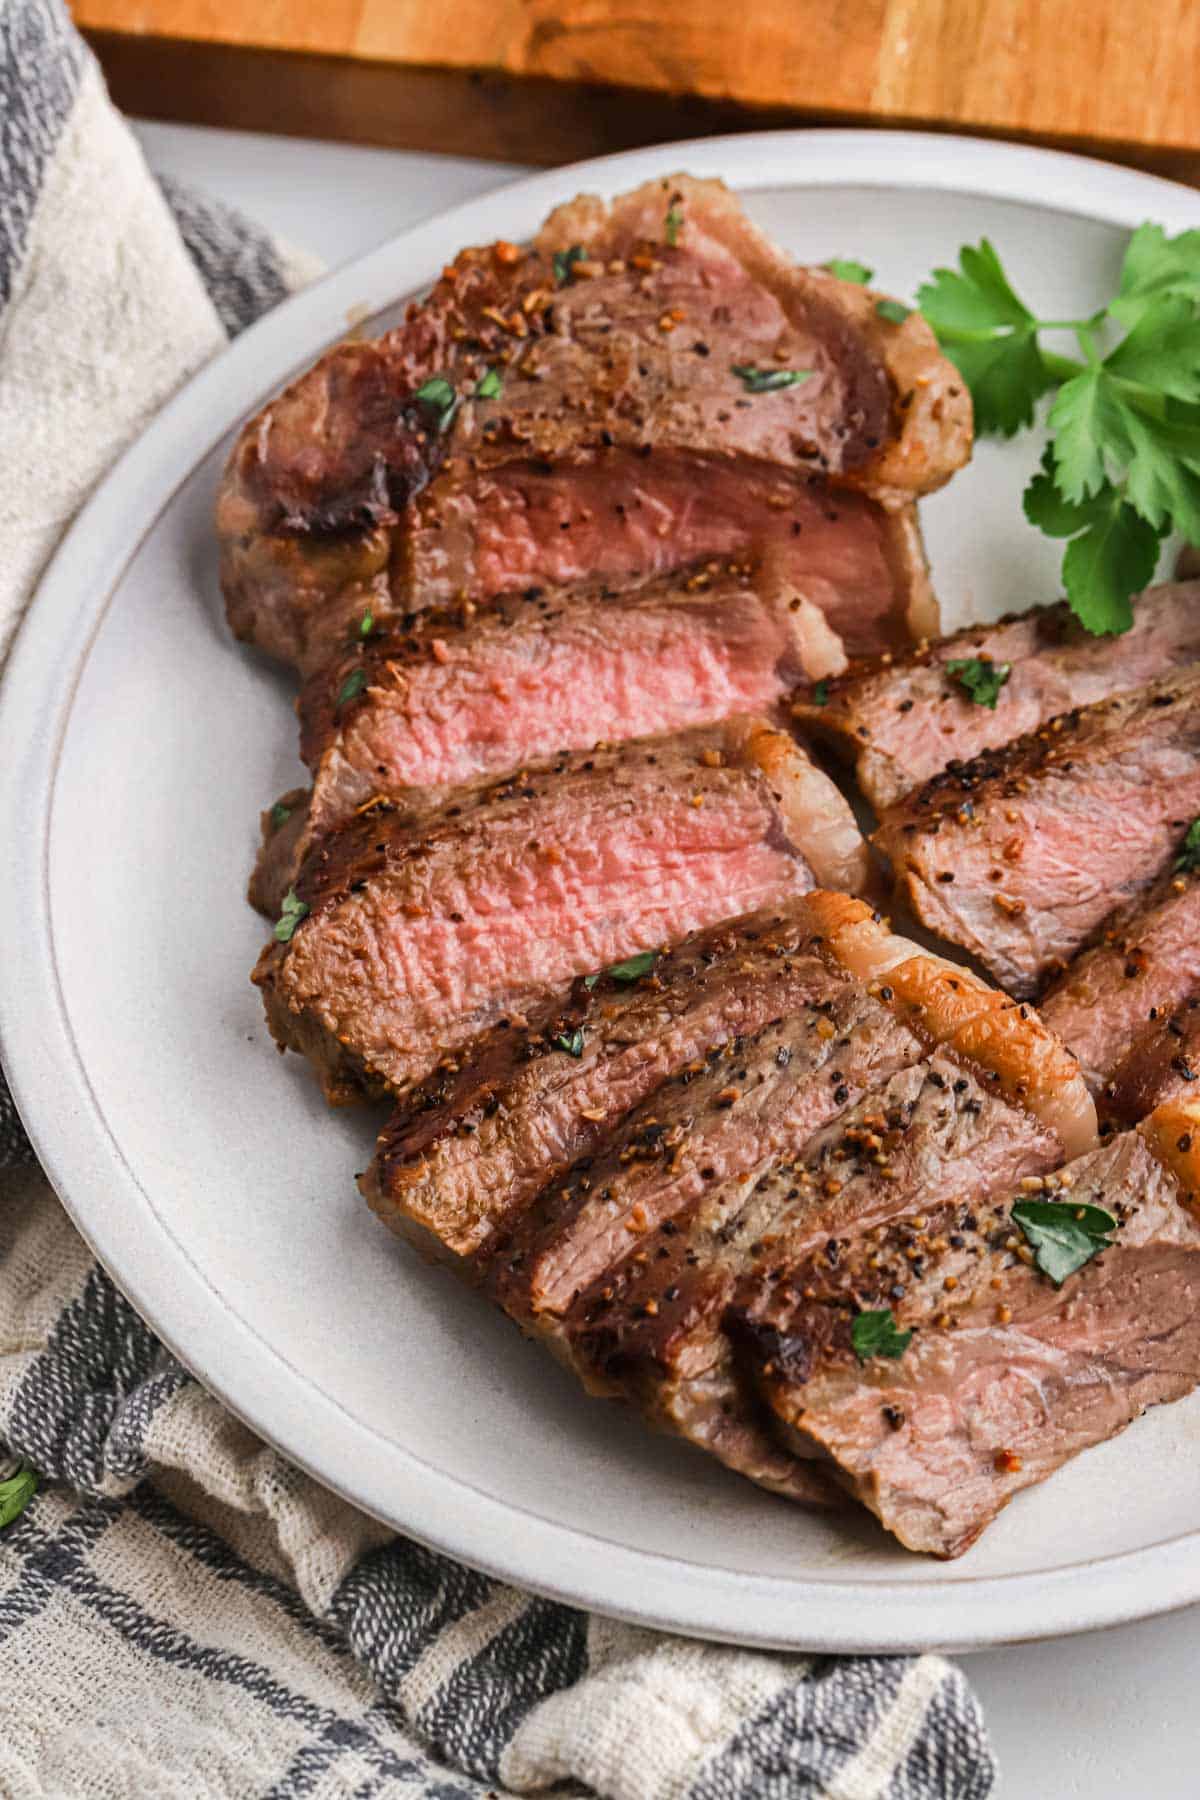 Sliced seared steak on a plate.